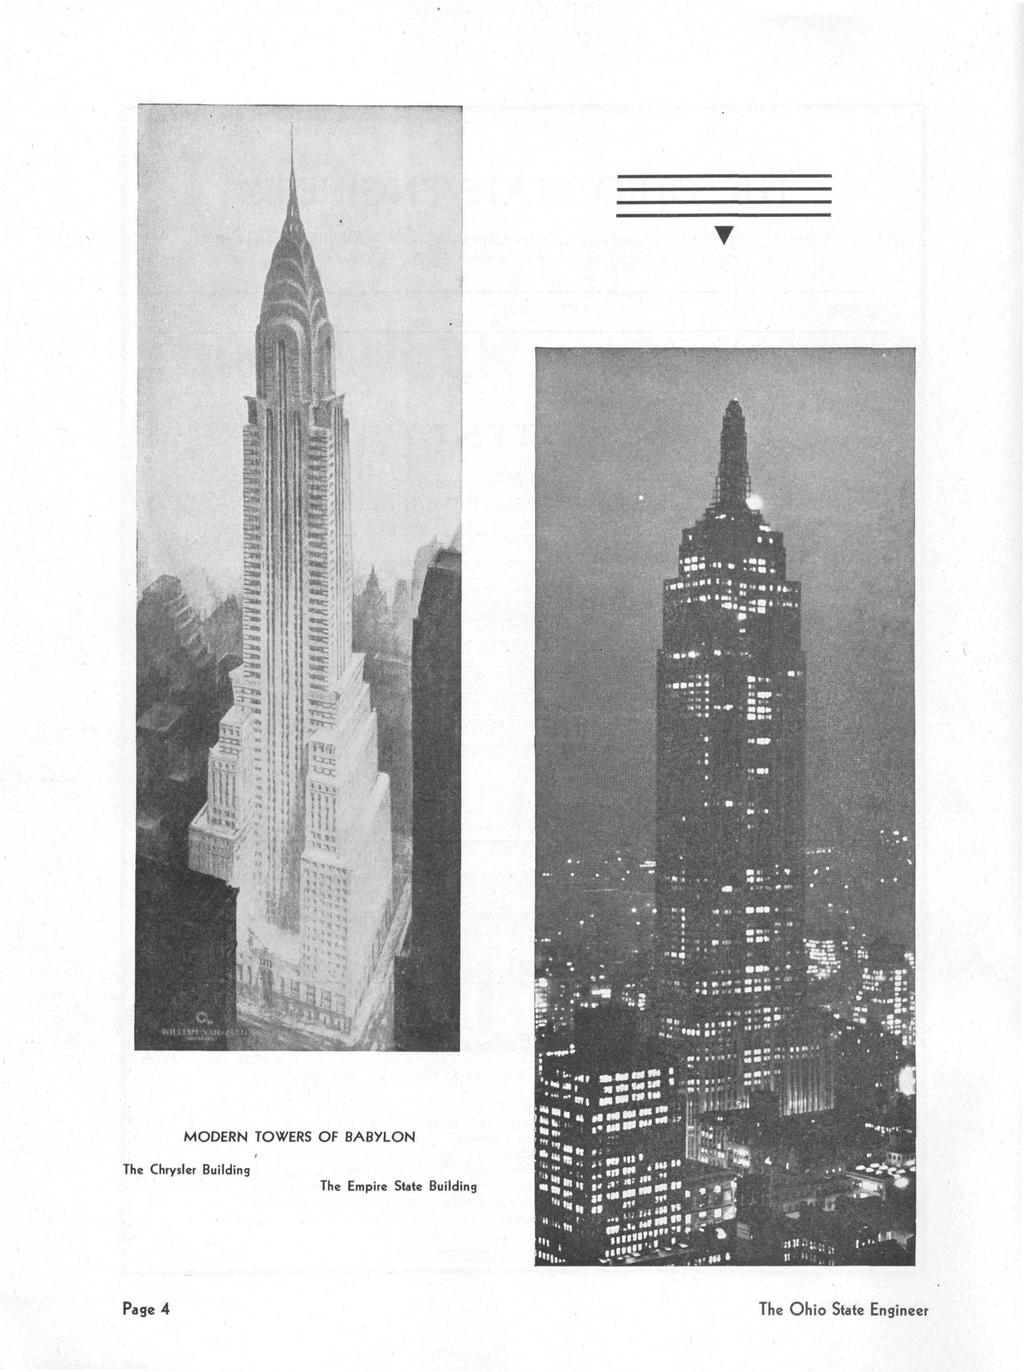 MODERN TOWERS OF BABYLON The Chrysler Building The